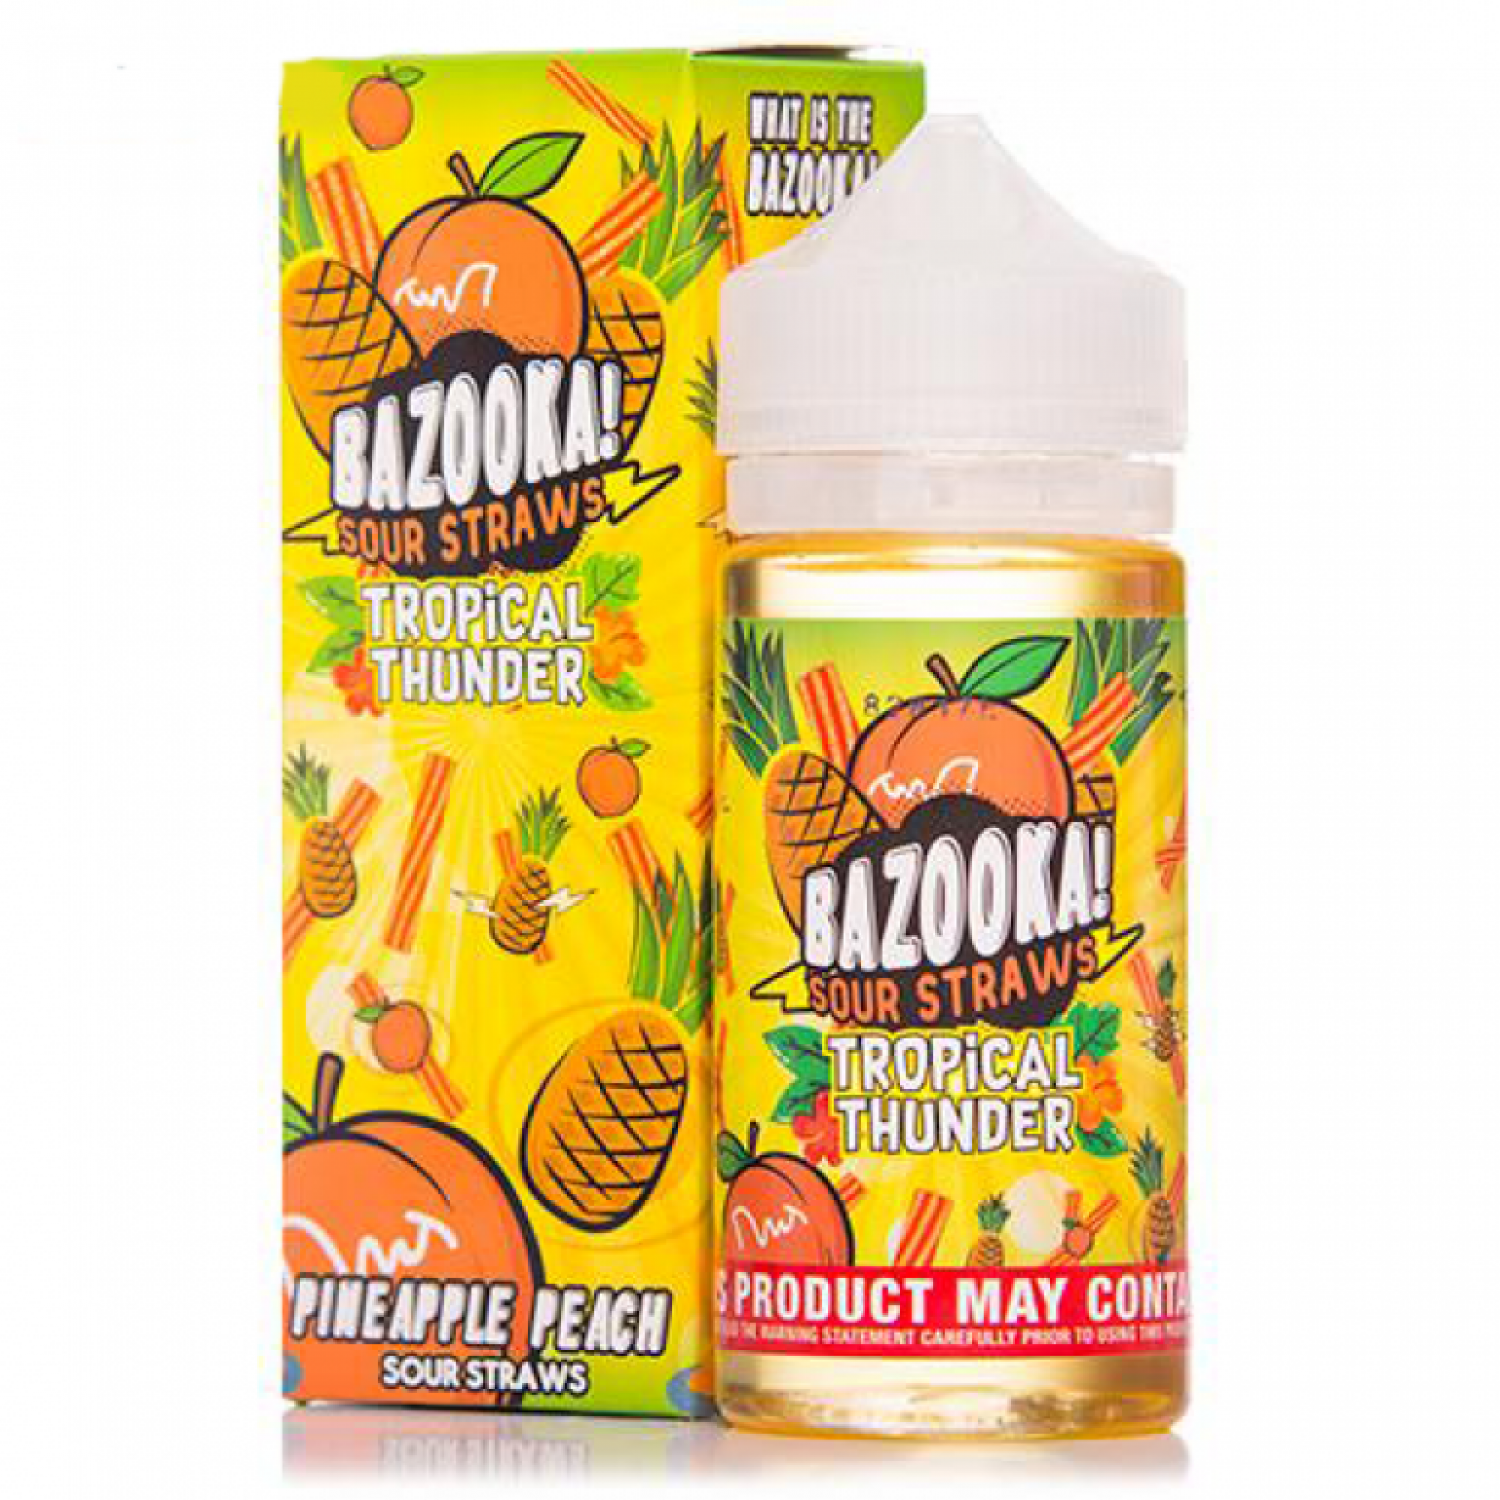 Bazooka - Tropical Thunder Pineapple Peach 100 ml Premium Likit